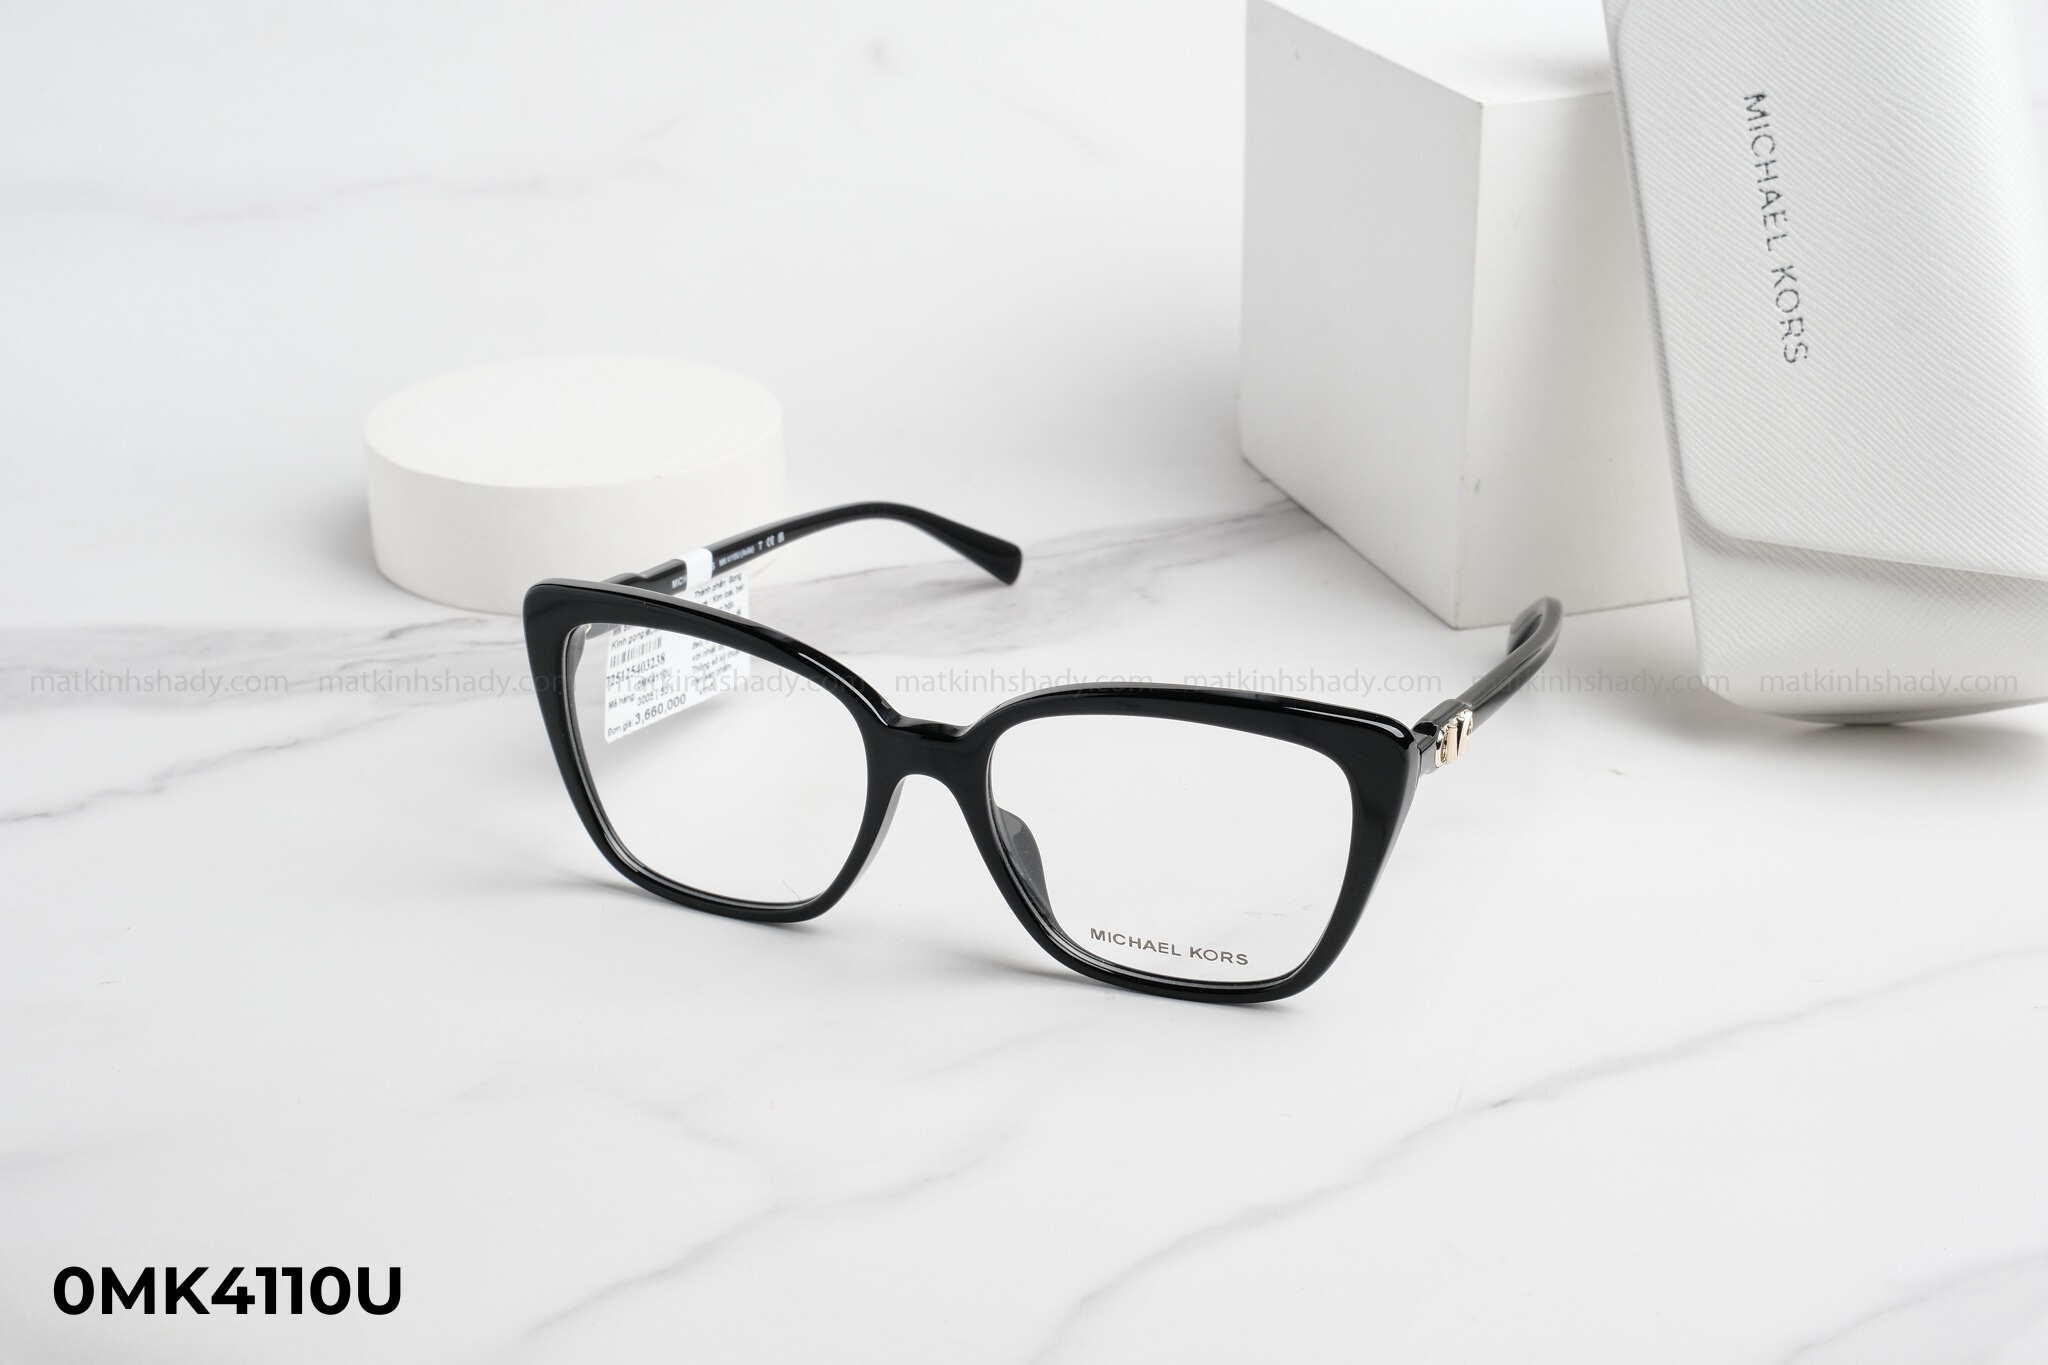  Michael Kors Eyewear - Glasses - 0MK4110 